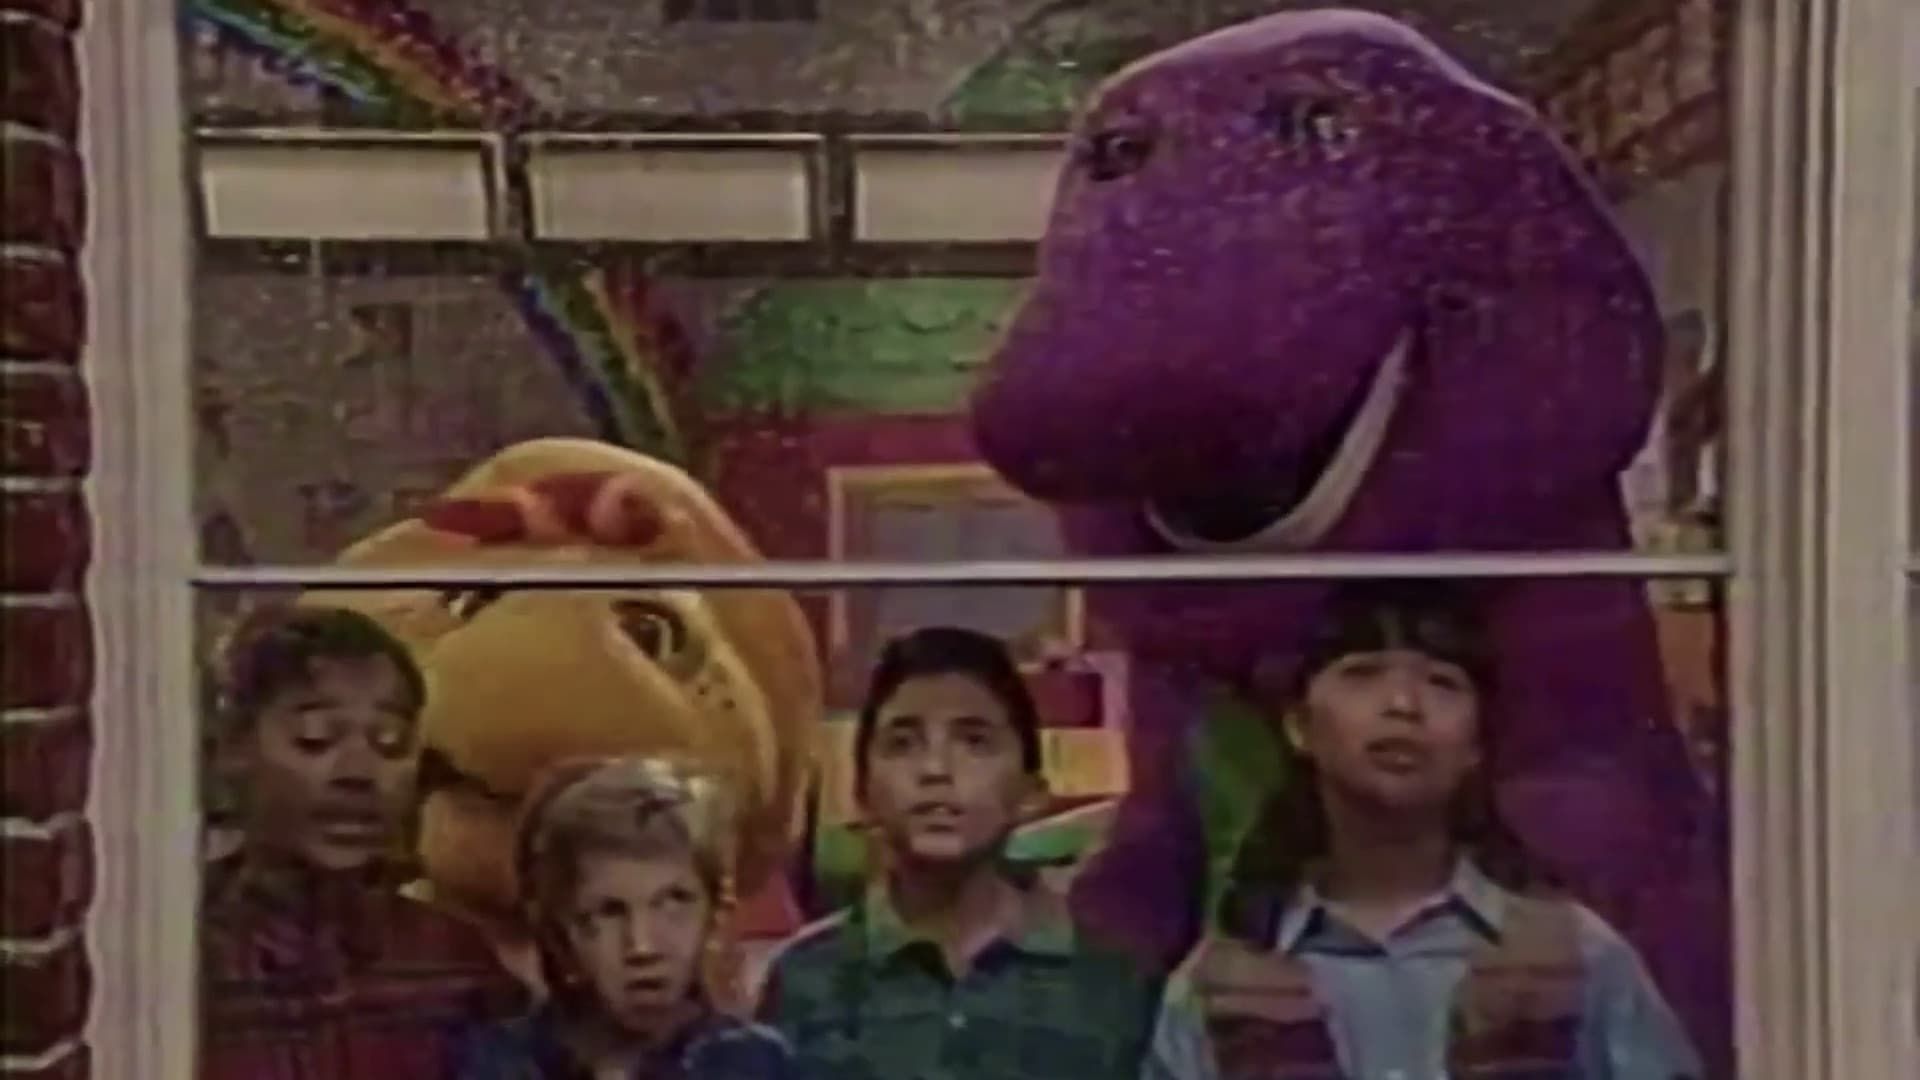 Barney & Friends background